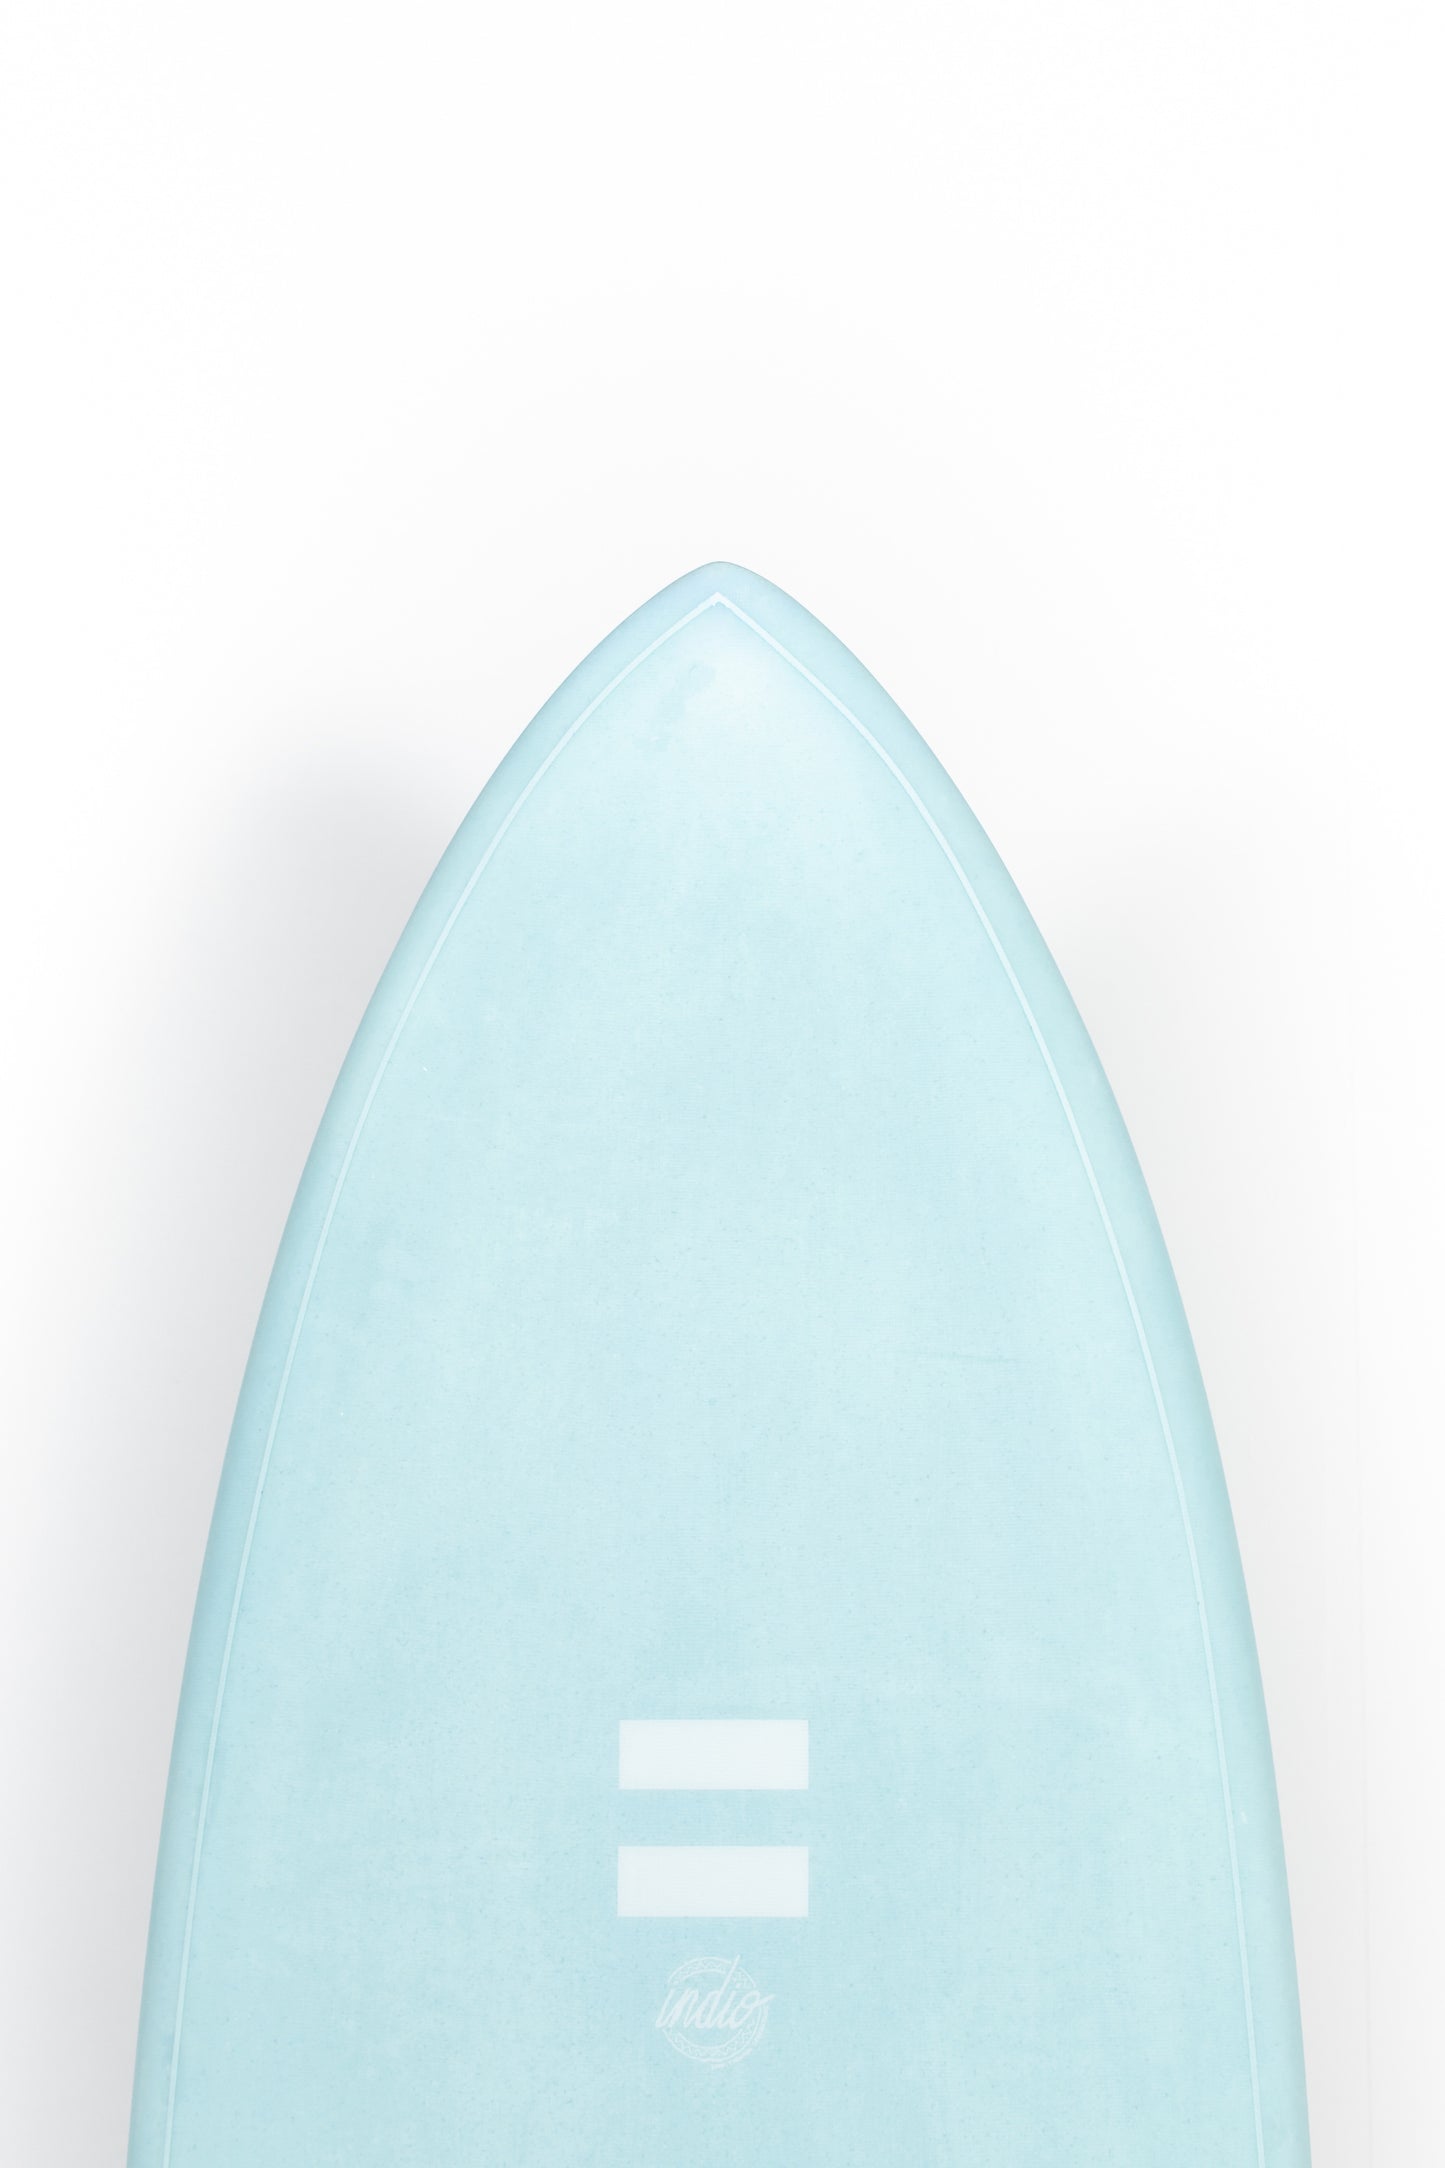 
                  
                    Pukas Surf Shop - Indio Endurance - RACER Aqua Blue - 6´4 x 21 1/4 x 2 11/16 - 42L
                  
                